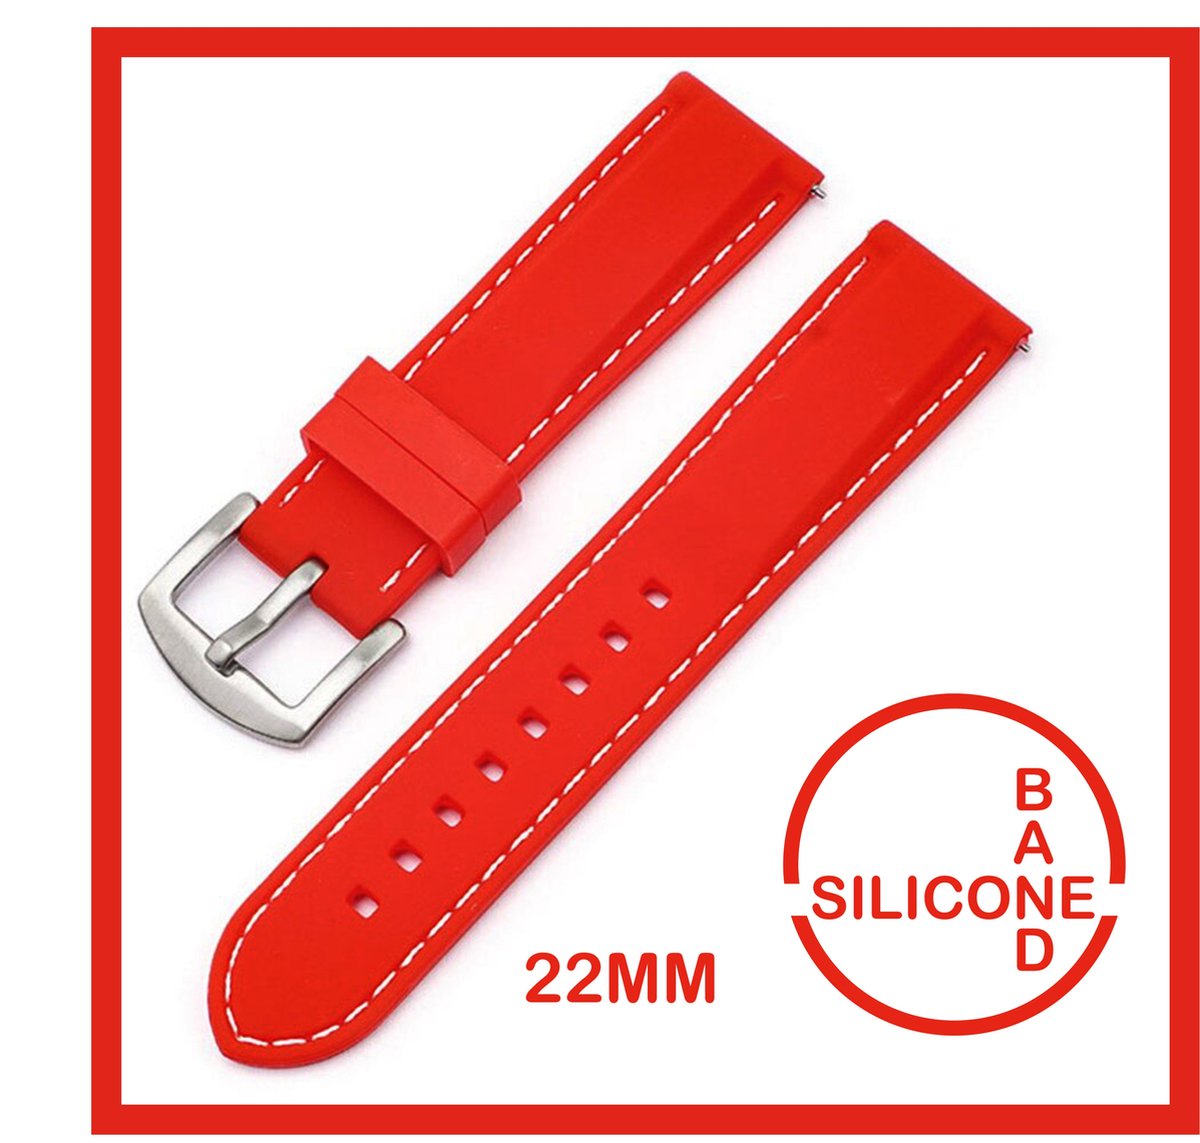 22mm Rubber Siliconen horlogeband Rood met witte stiksels passend op o.a Casio Seiko Citizen en alle andere merken - 22 mm Bandje - Horlogebandje horlogeband